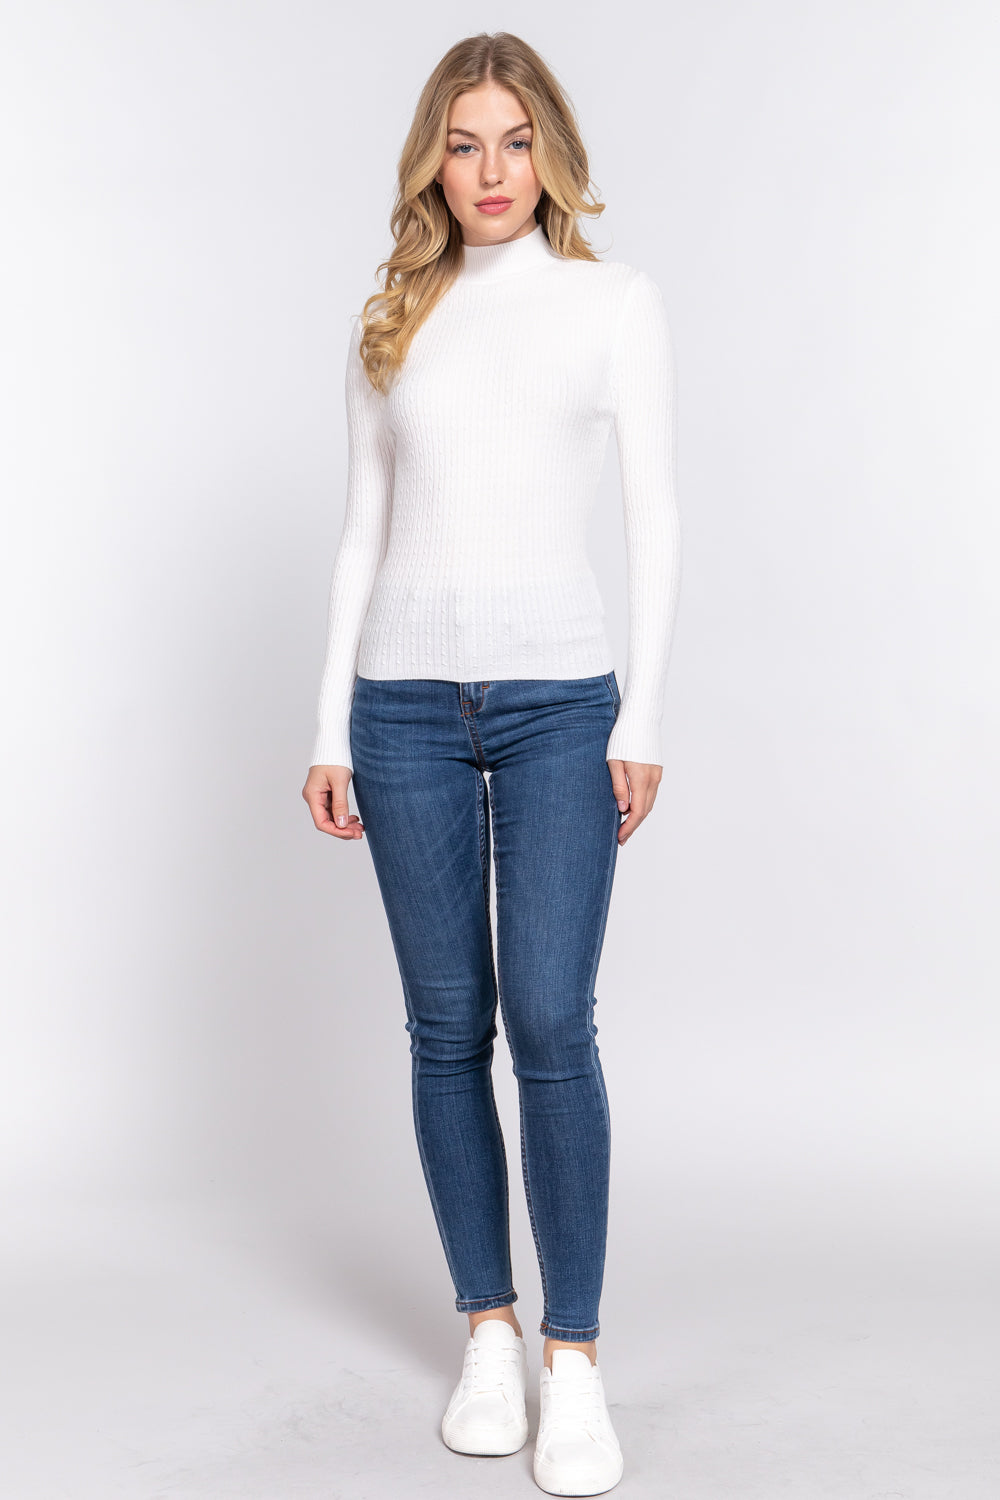 Active Basic Ribbed Mock Neck Sweater Shirts & Tops RYSE Clothing Co. Off White S 